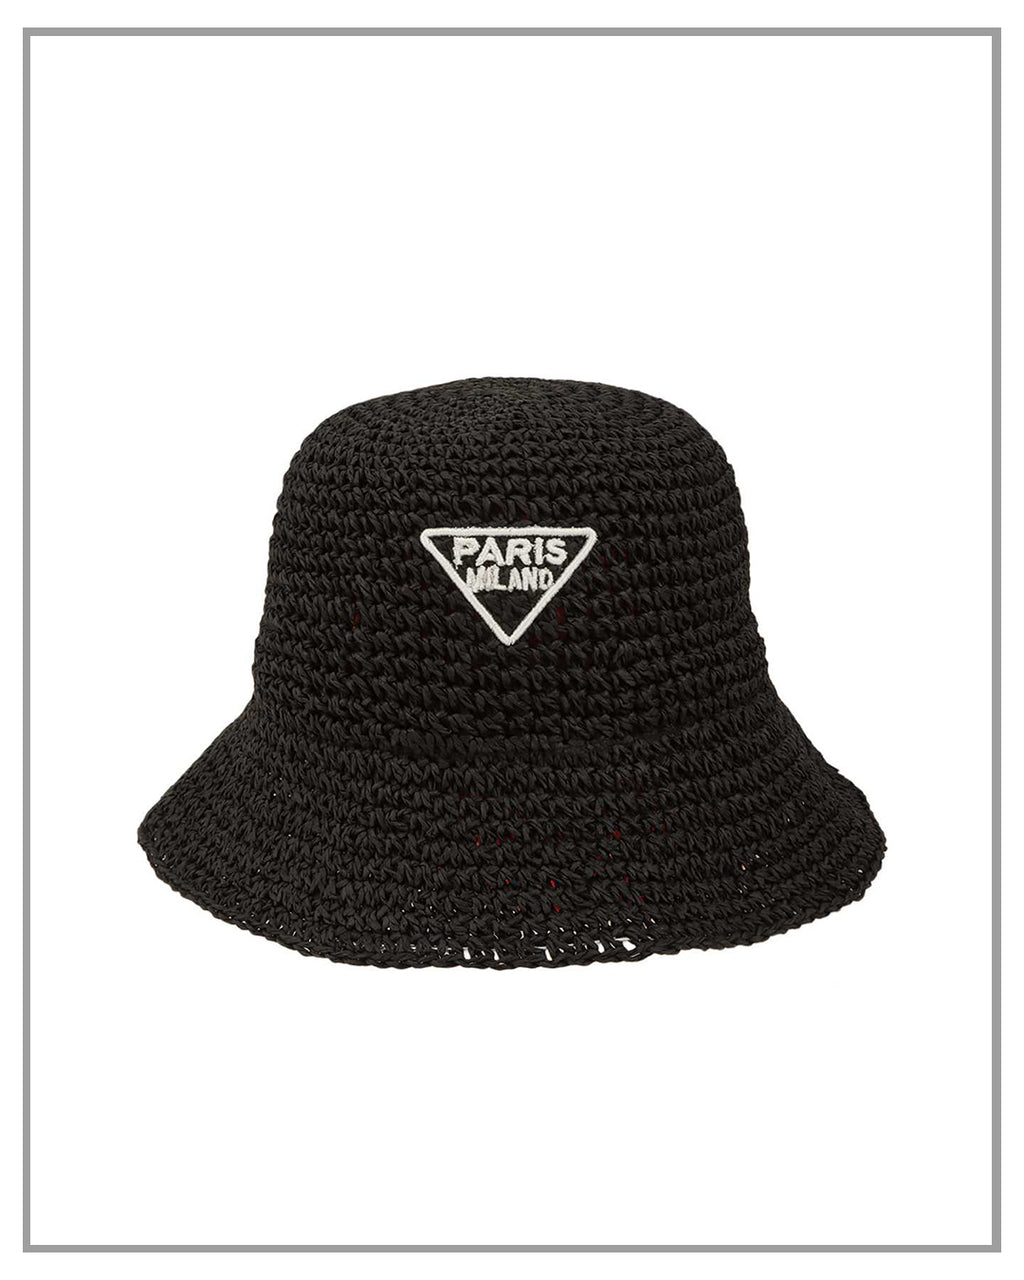 Paris Milano Black Embroidery Straw Bucket Hat